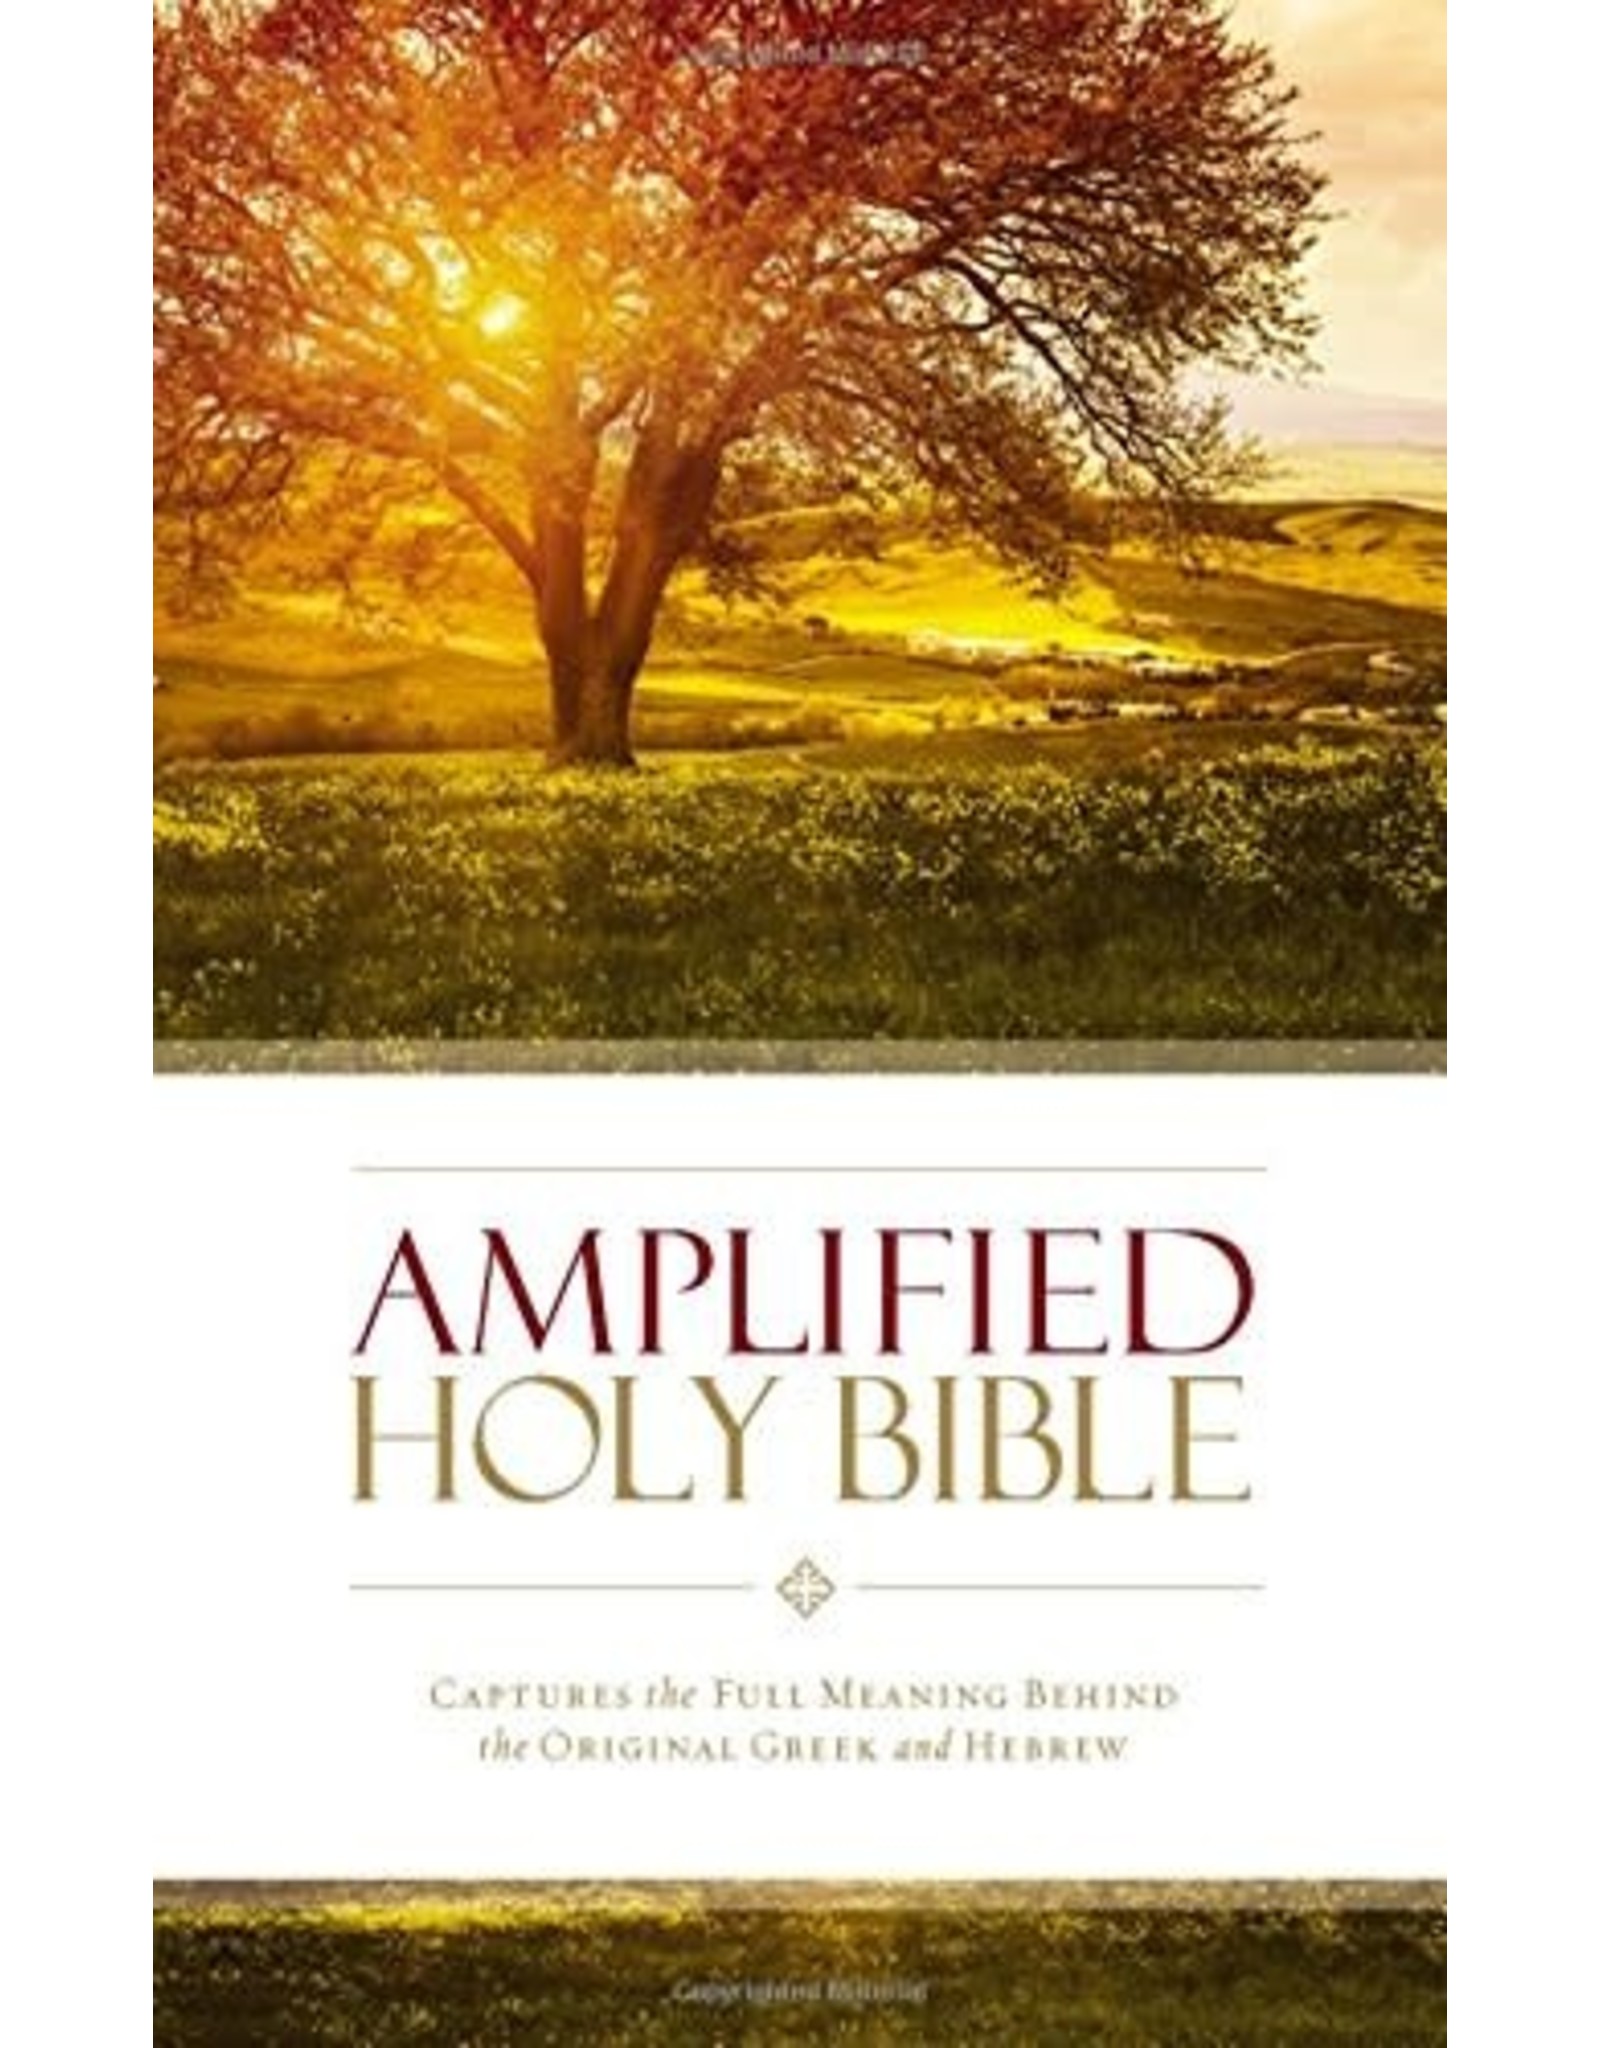 Zondervan Amplified Bible (AMP) Large Print